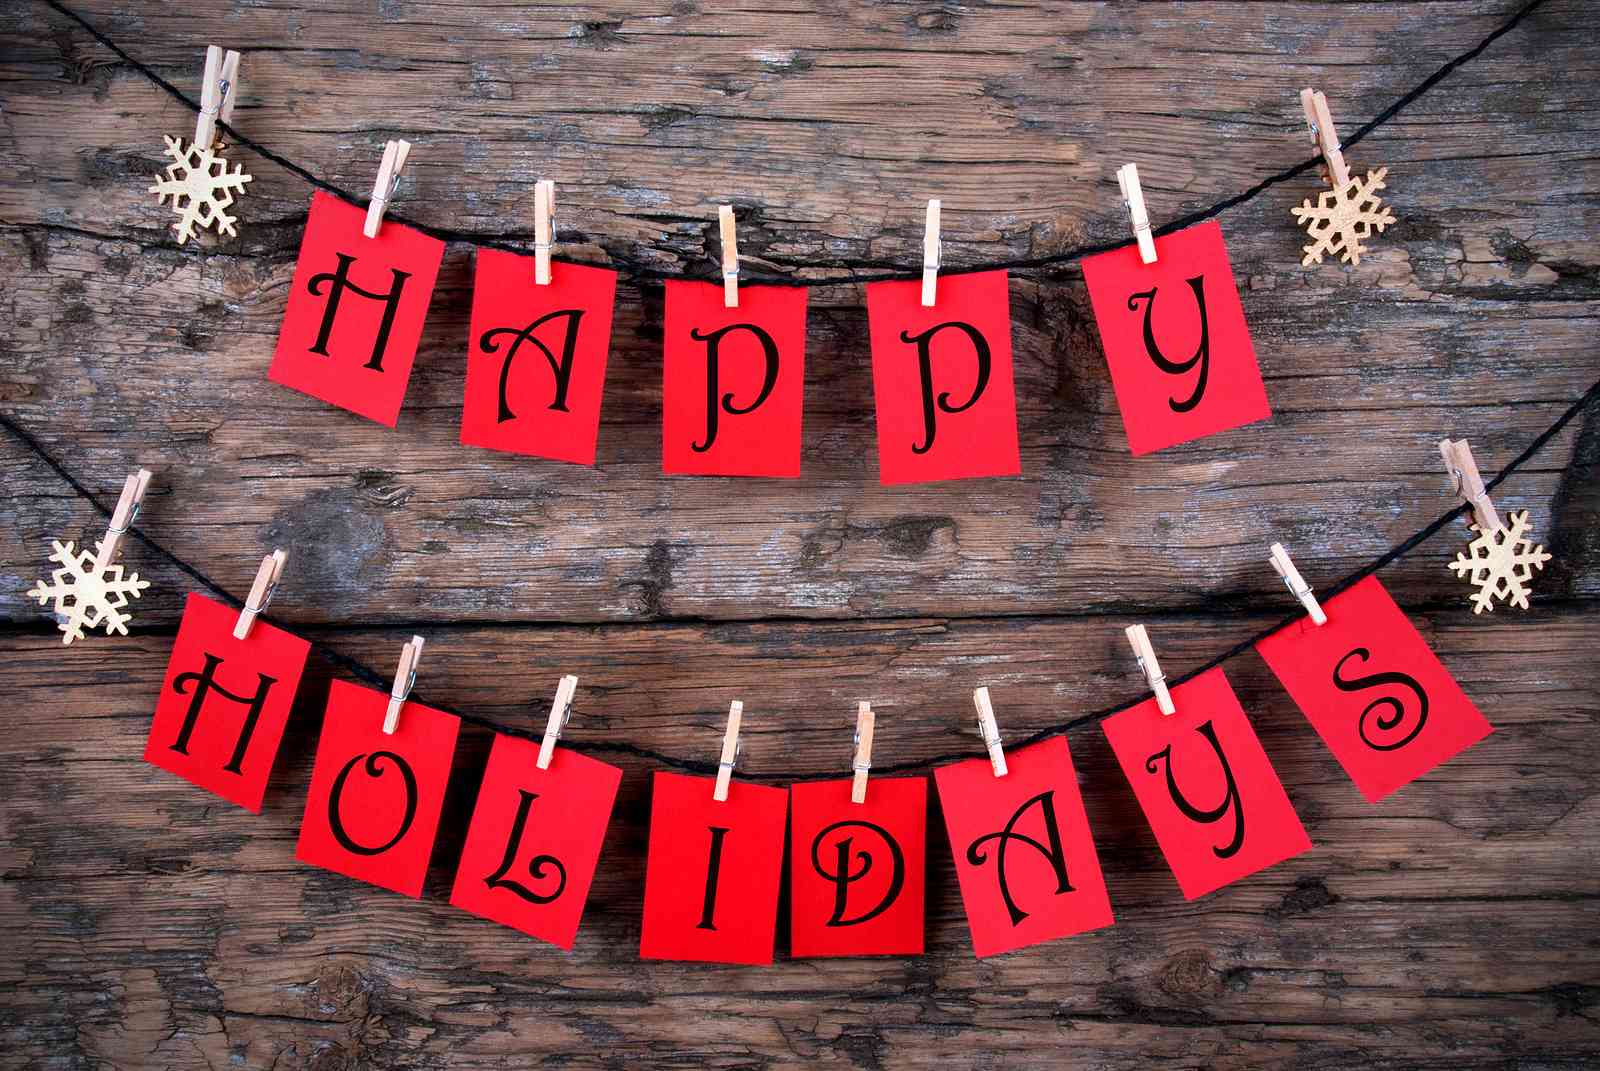 NOLA-Happy-Holidays-Greetings